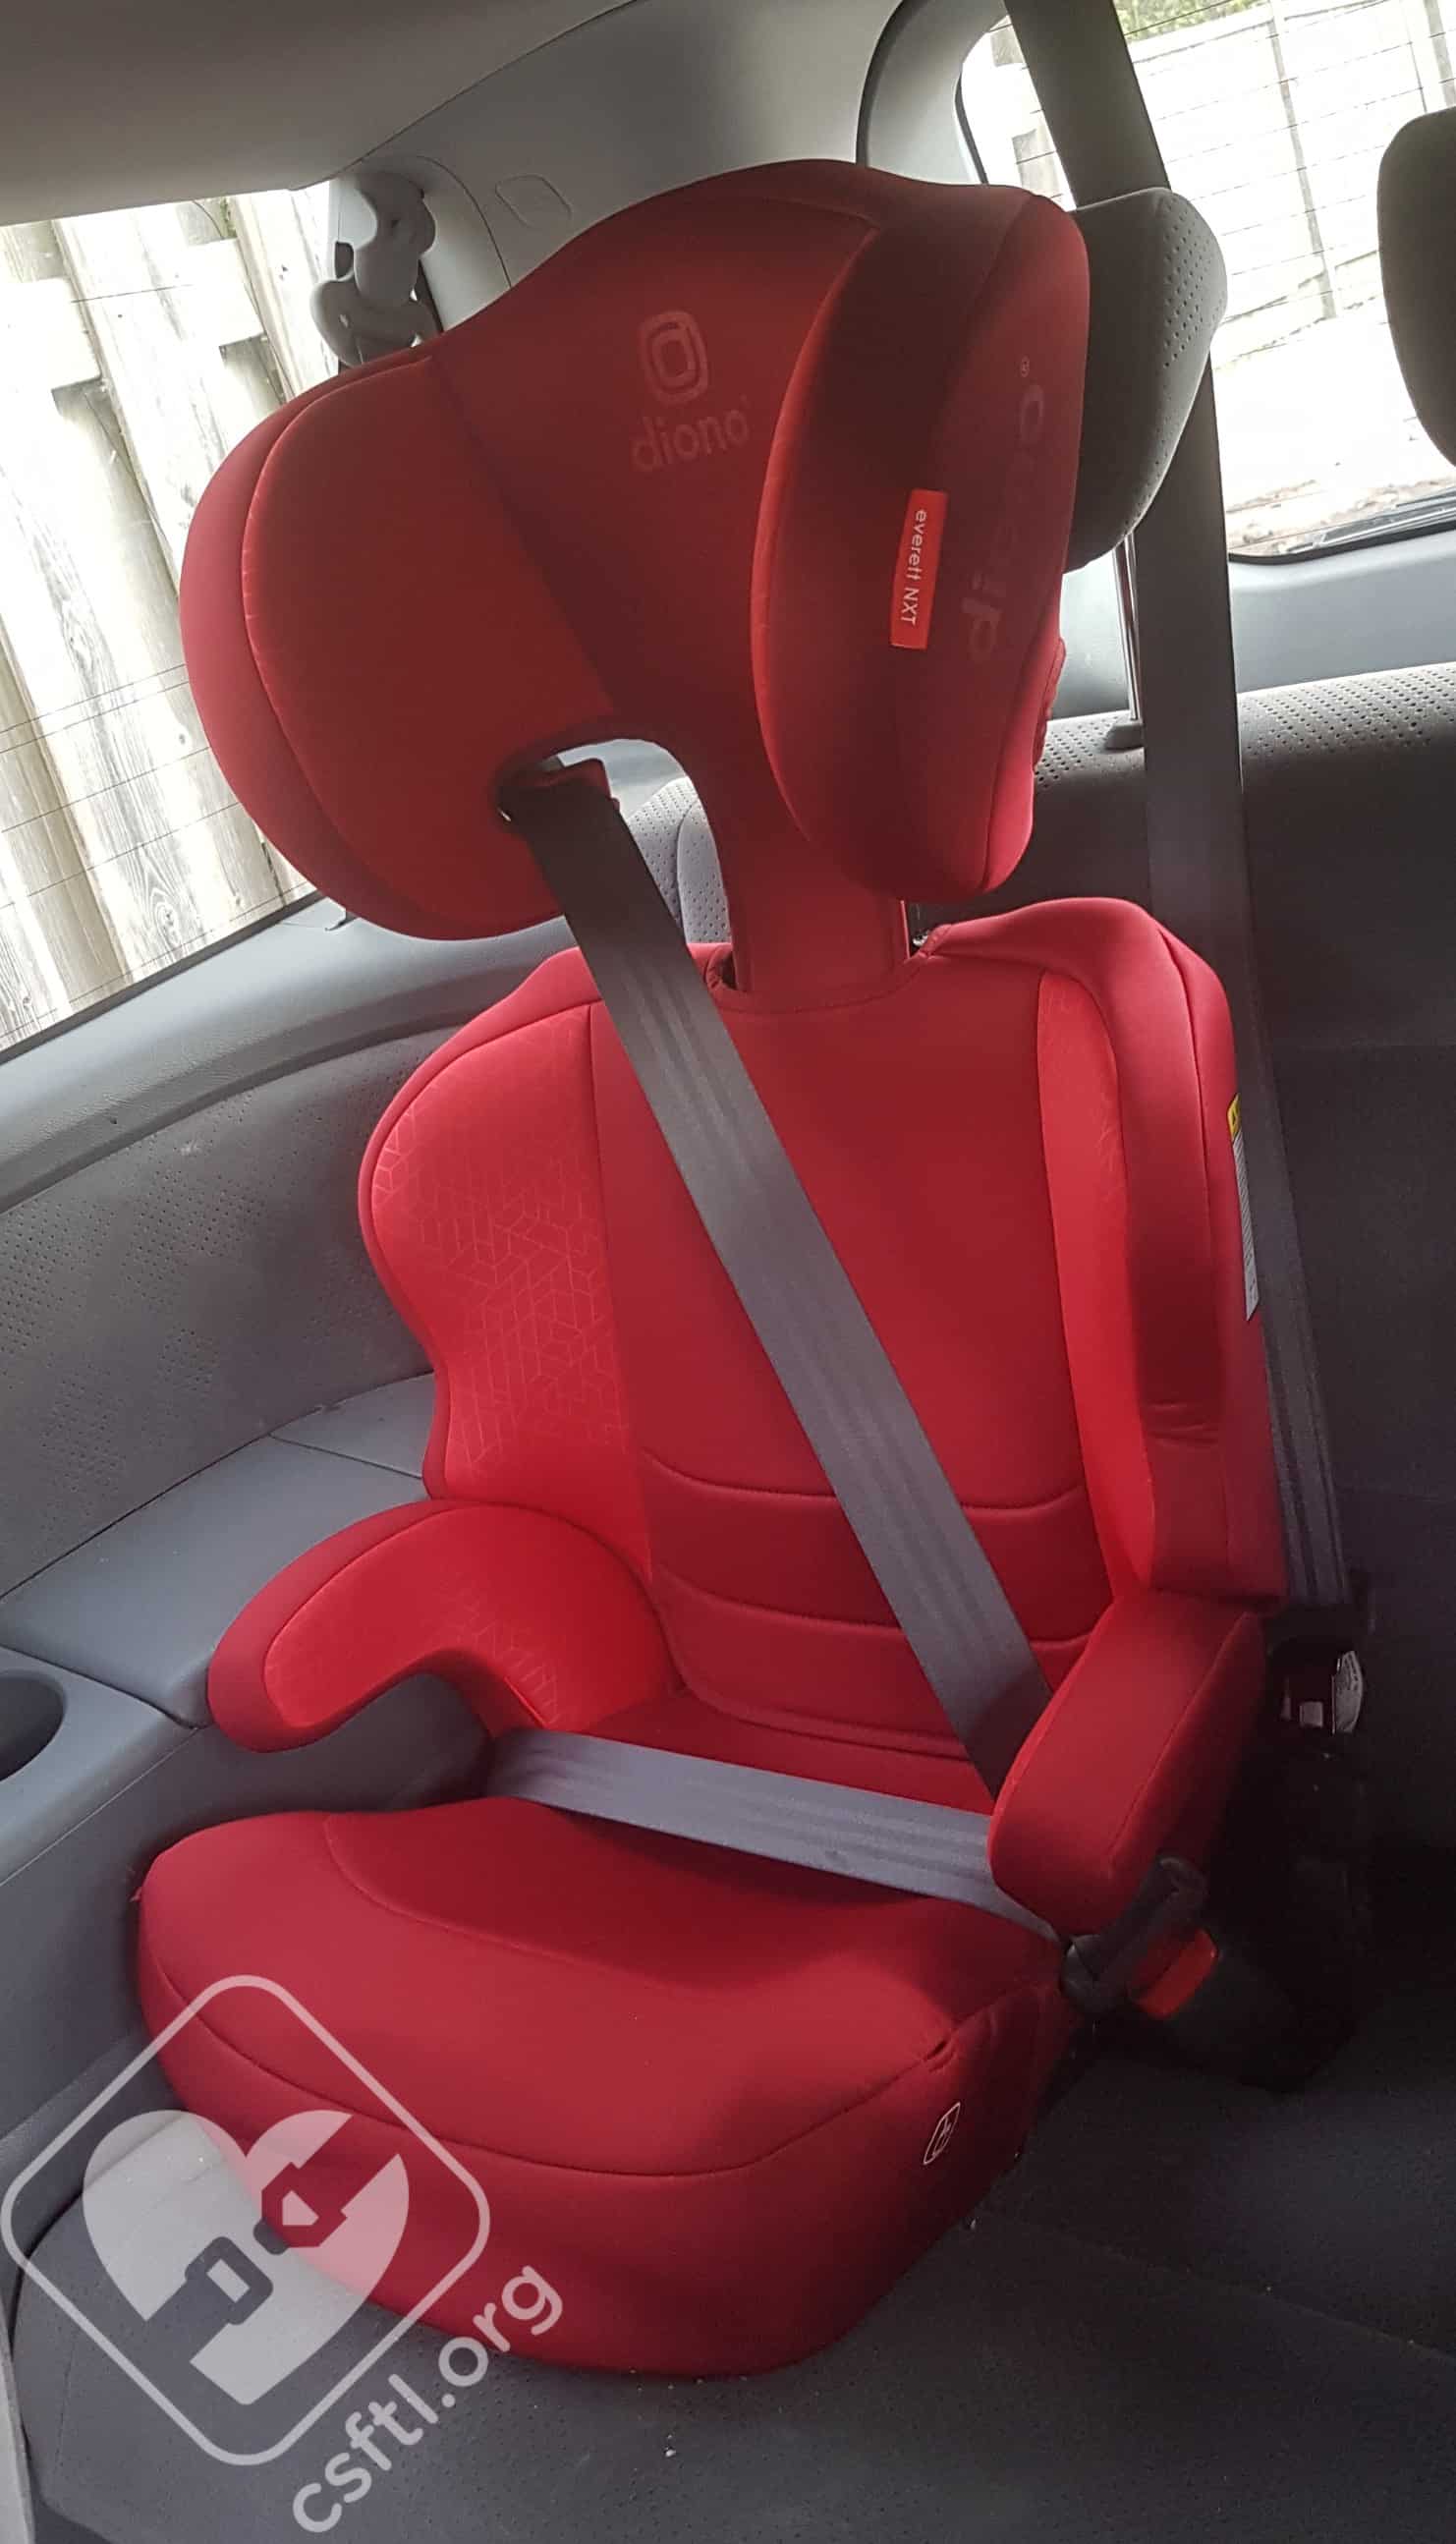 Kind + Jugend 2019 - Car Seats For The Littles